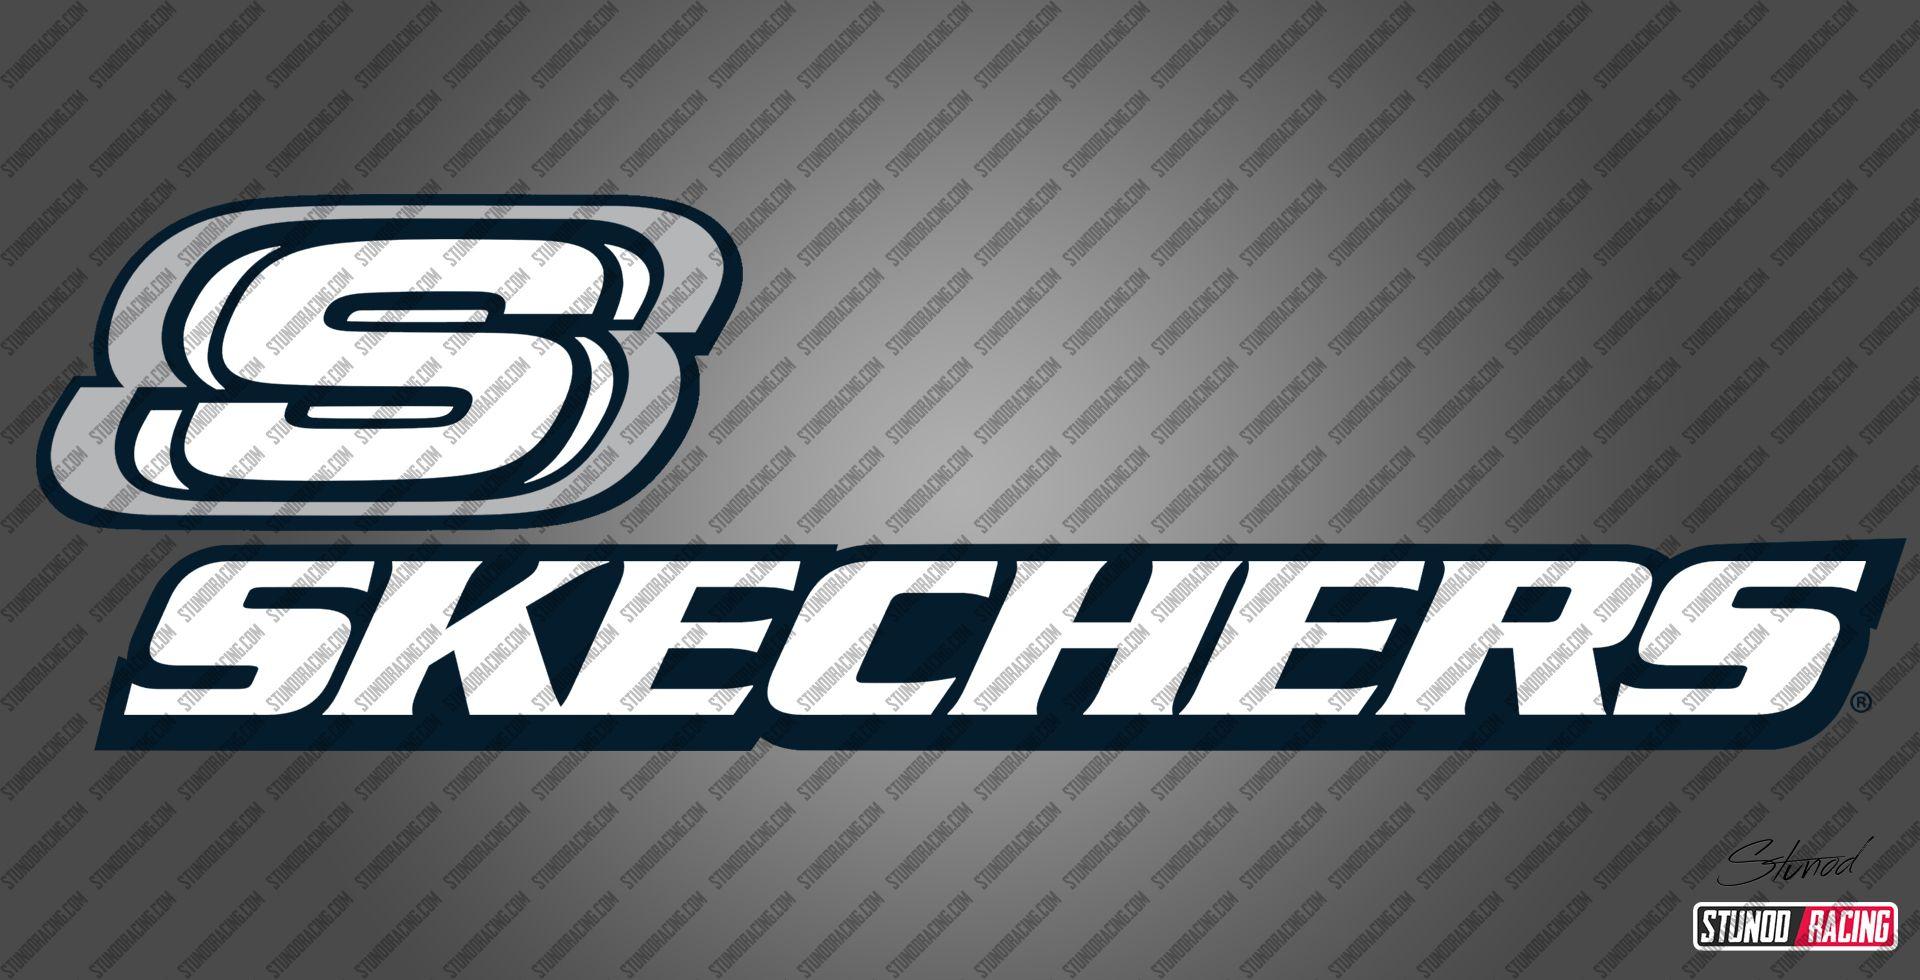 Scechers Logo - Skechers Logo | Stunod Racing